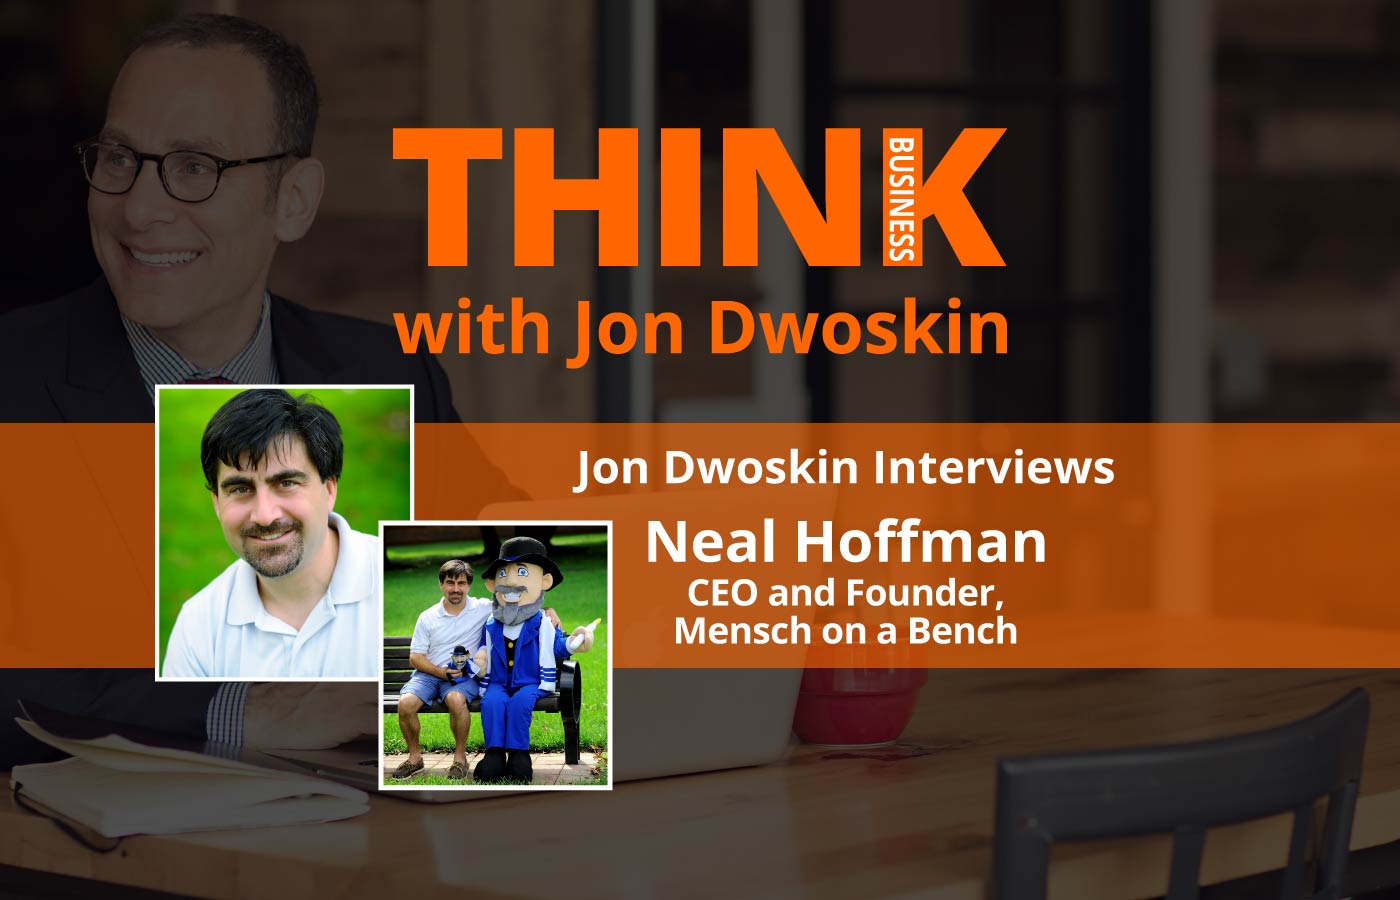 THINK Business: Jon Dwoskin Interviews Neal Hoffman, CEO and Founder, Mensch on a Bench